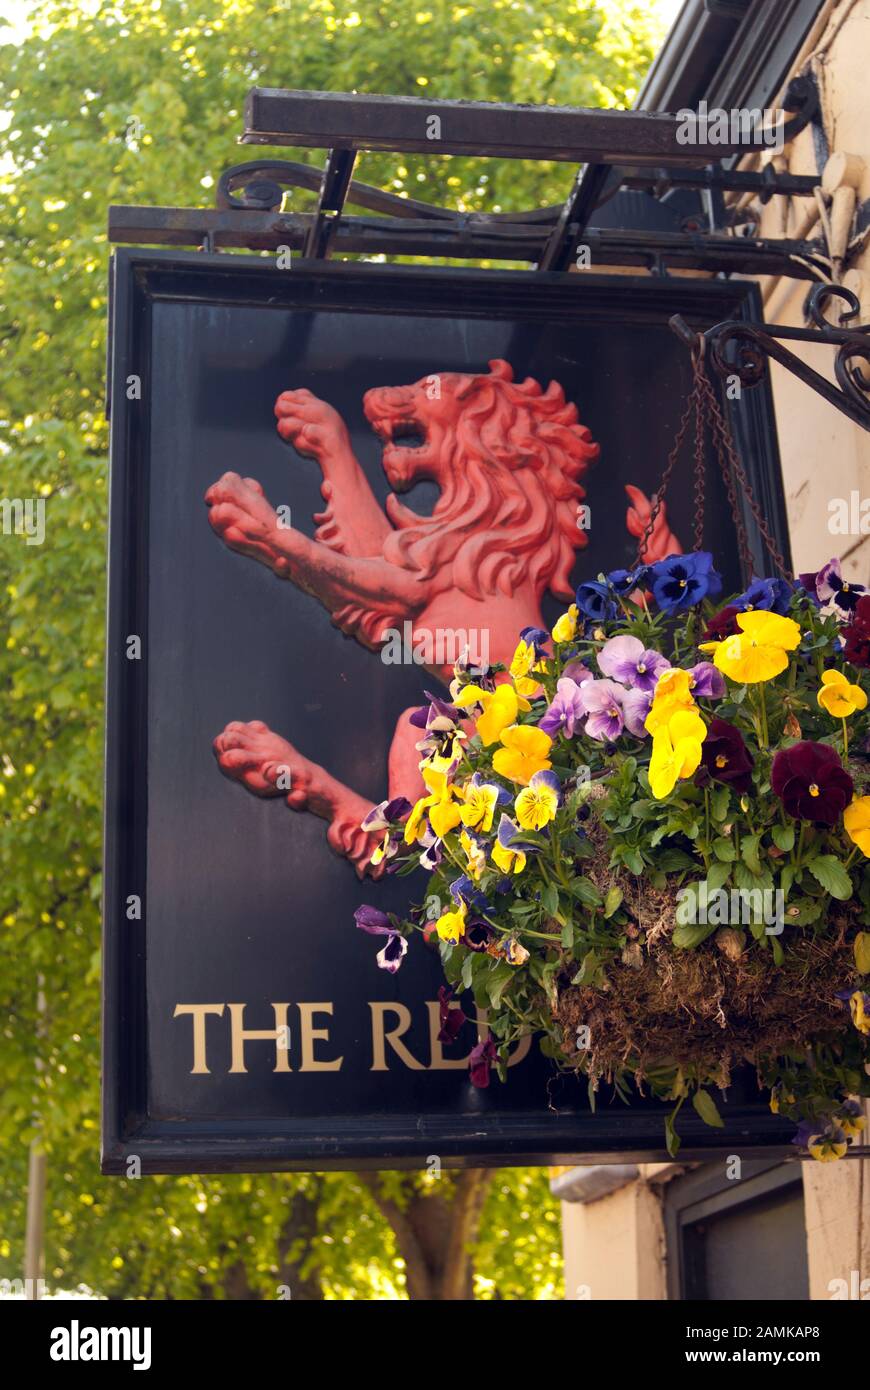 The Red Lion pub, West Boldon Stock Photo